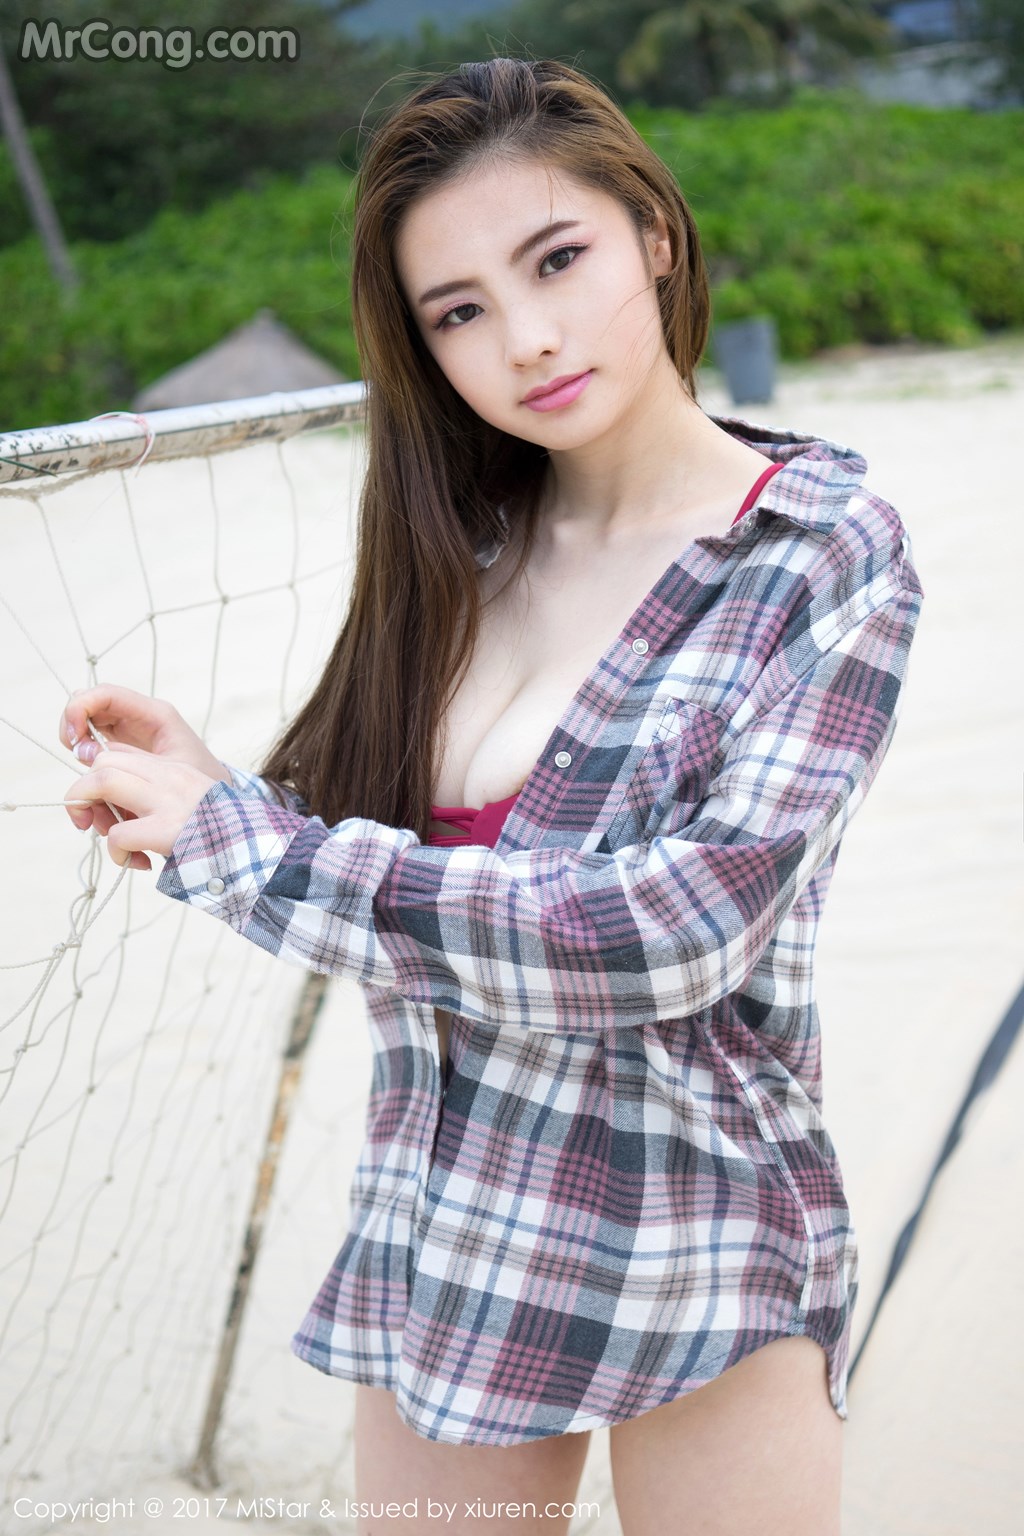 MiStar Vol.151: Model Jenny (佳妮) (51 photos)